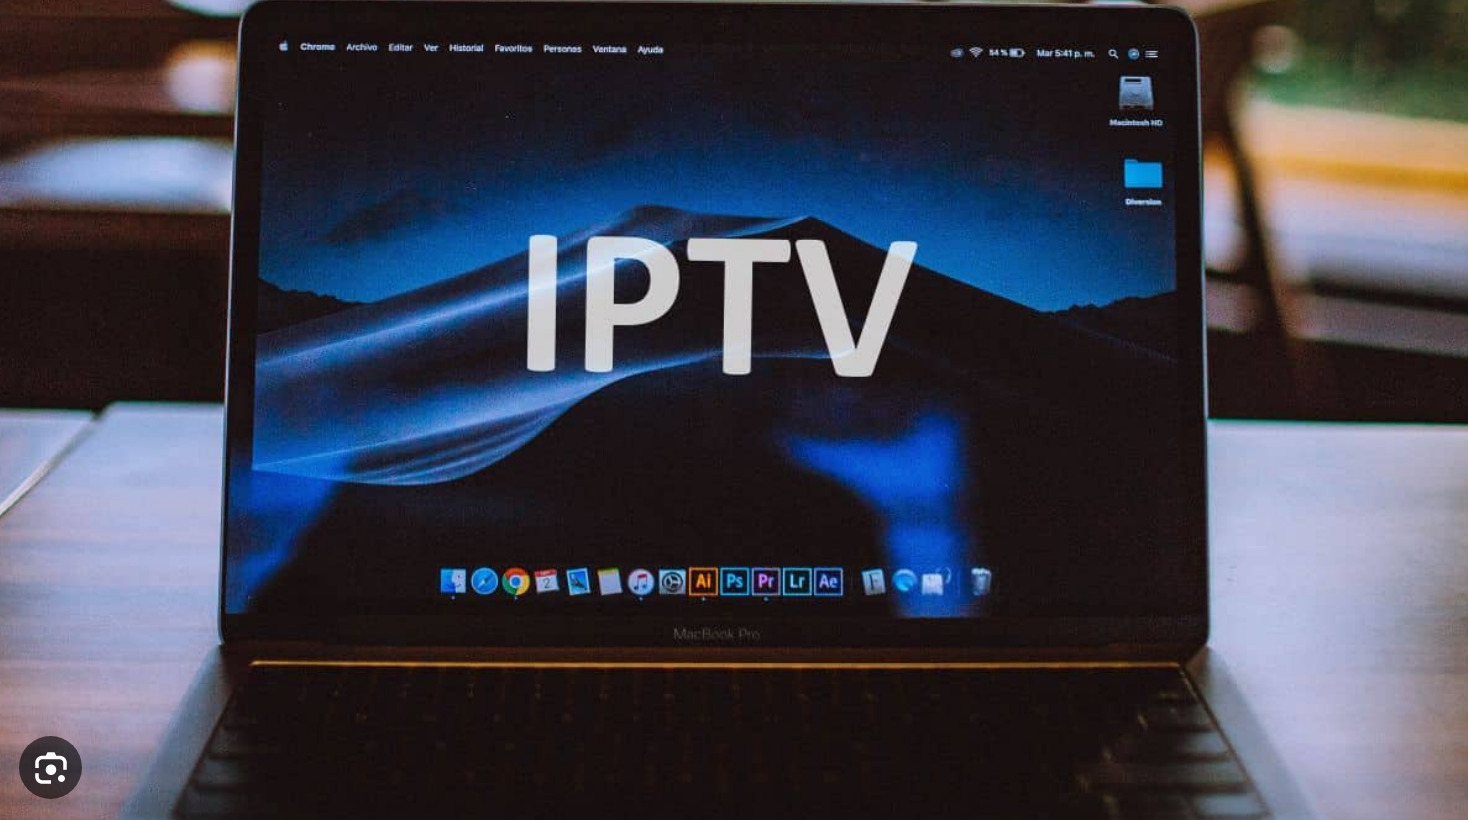 MAC IPTV